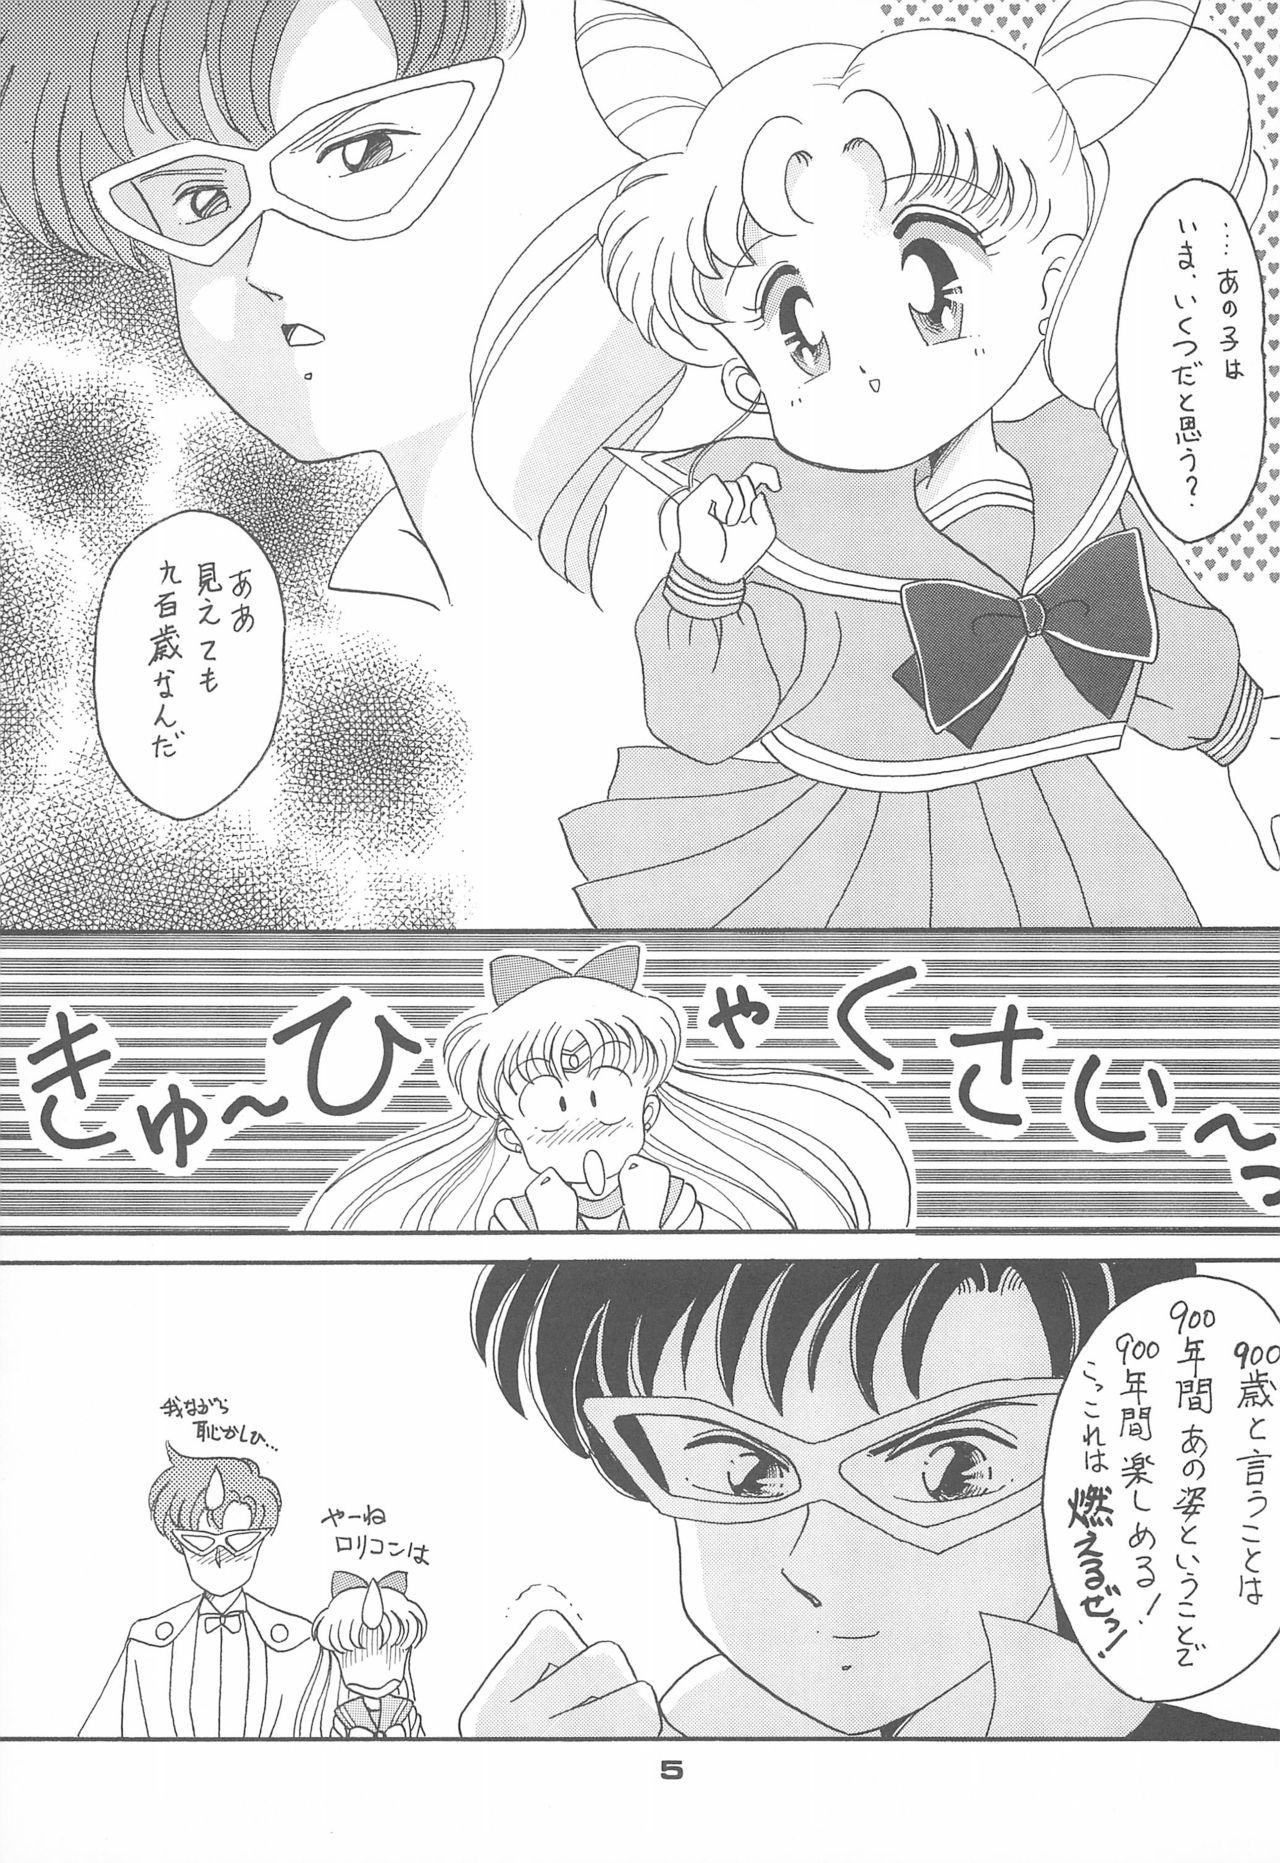 Office Sex Ponponpon 4 - Sailor moon Punish - Page 7